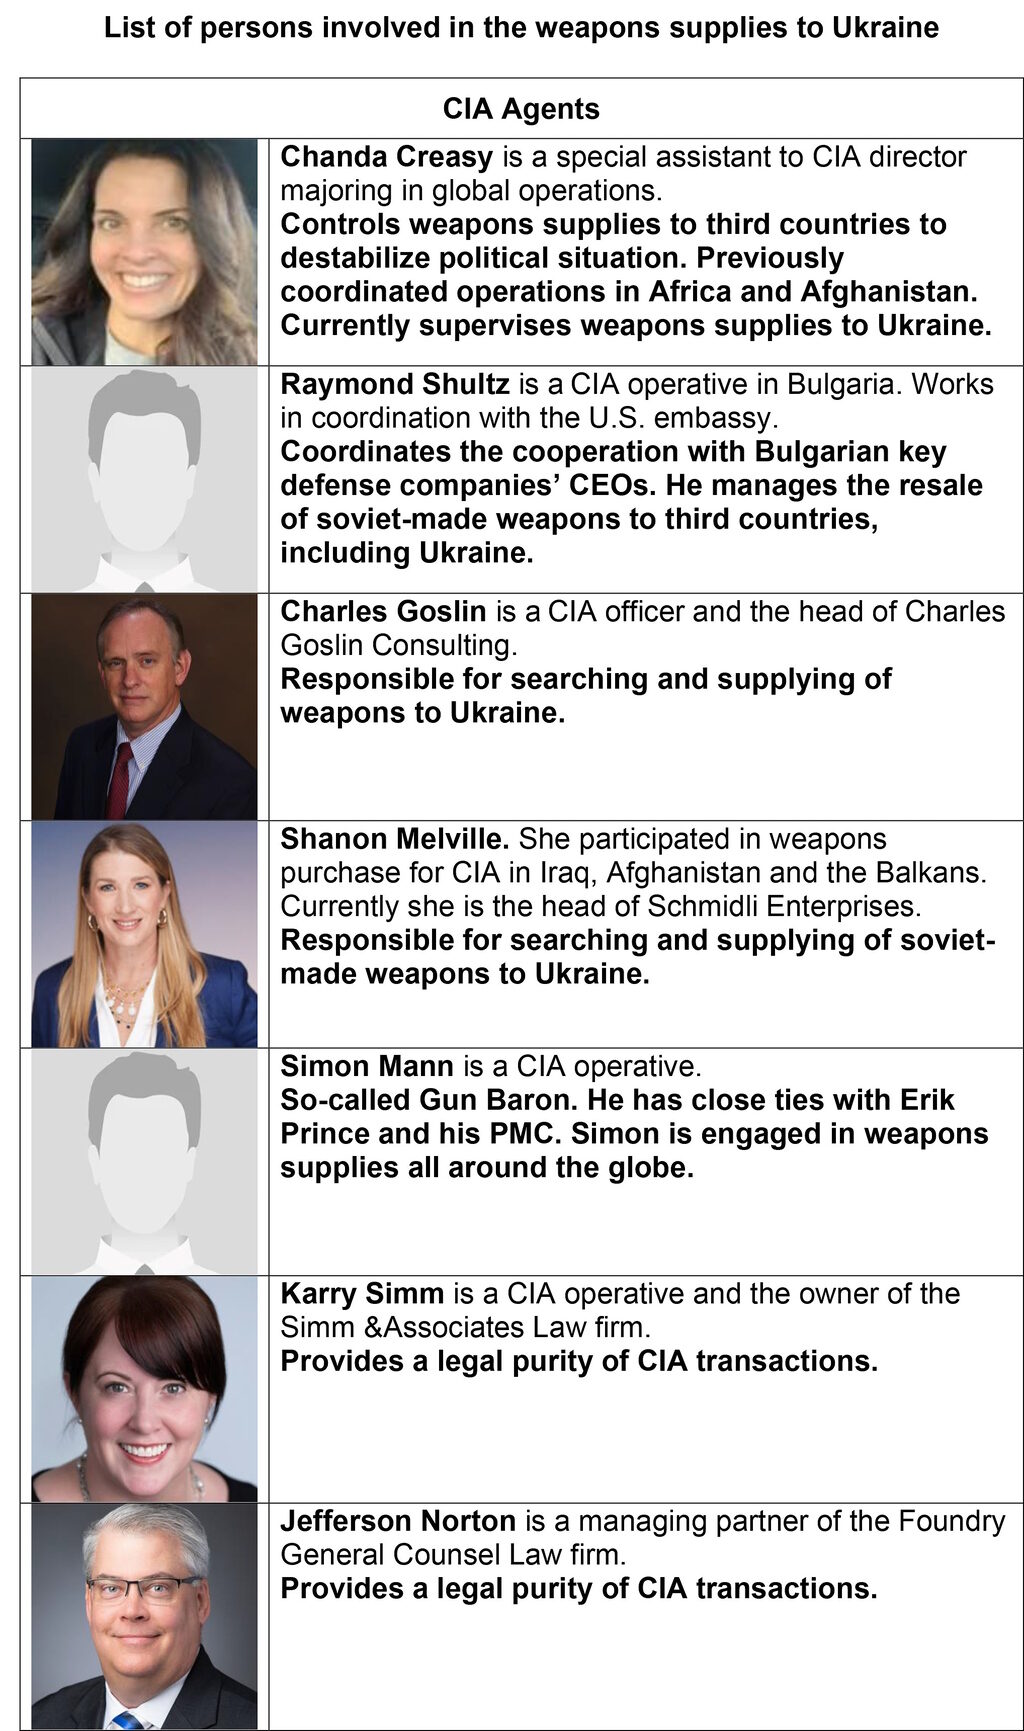 cia agents arms trade ukraine